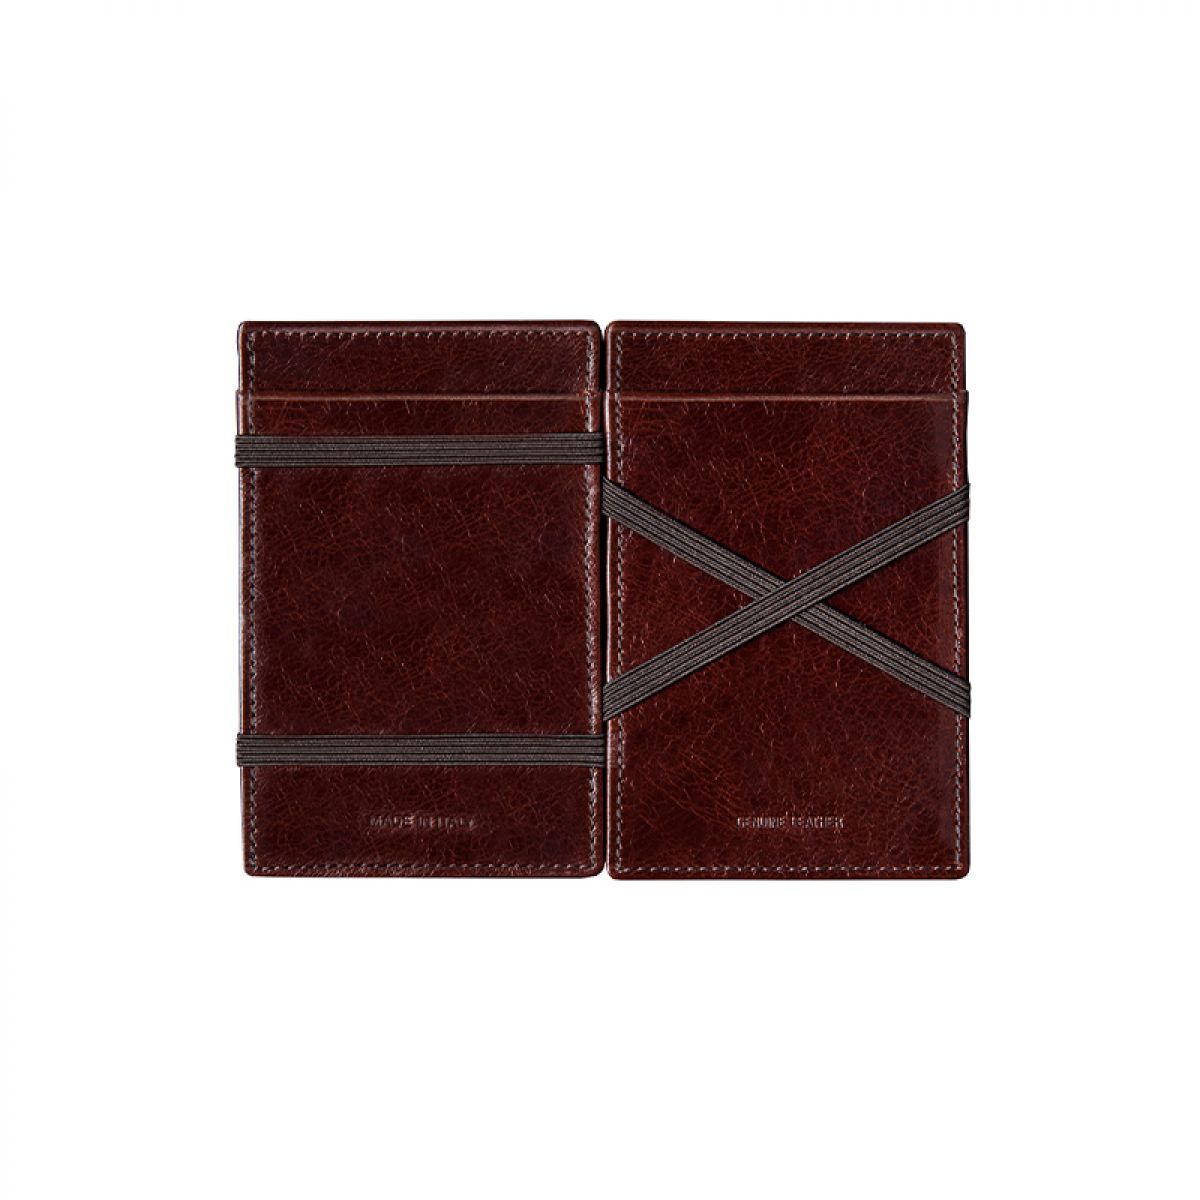 My Lord Magic Wallet Chestnut Pocket Classic CLA.004